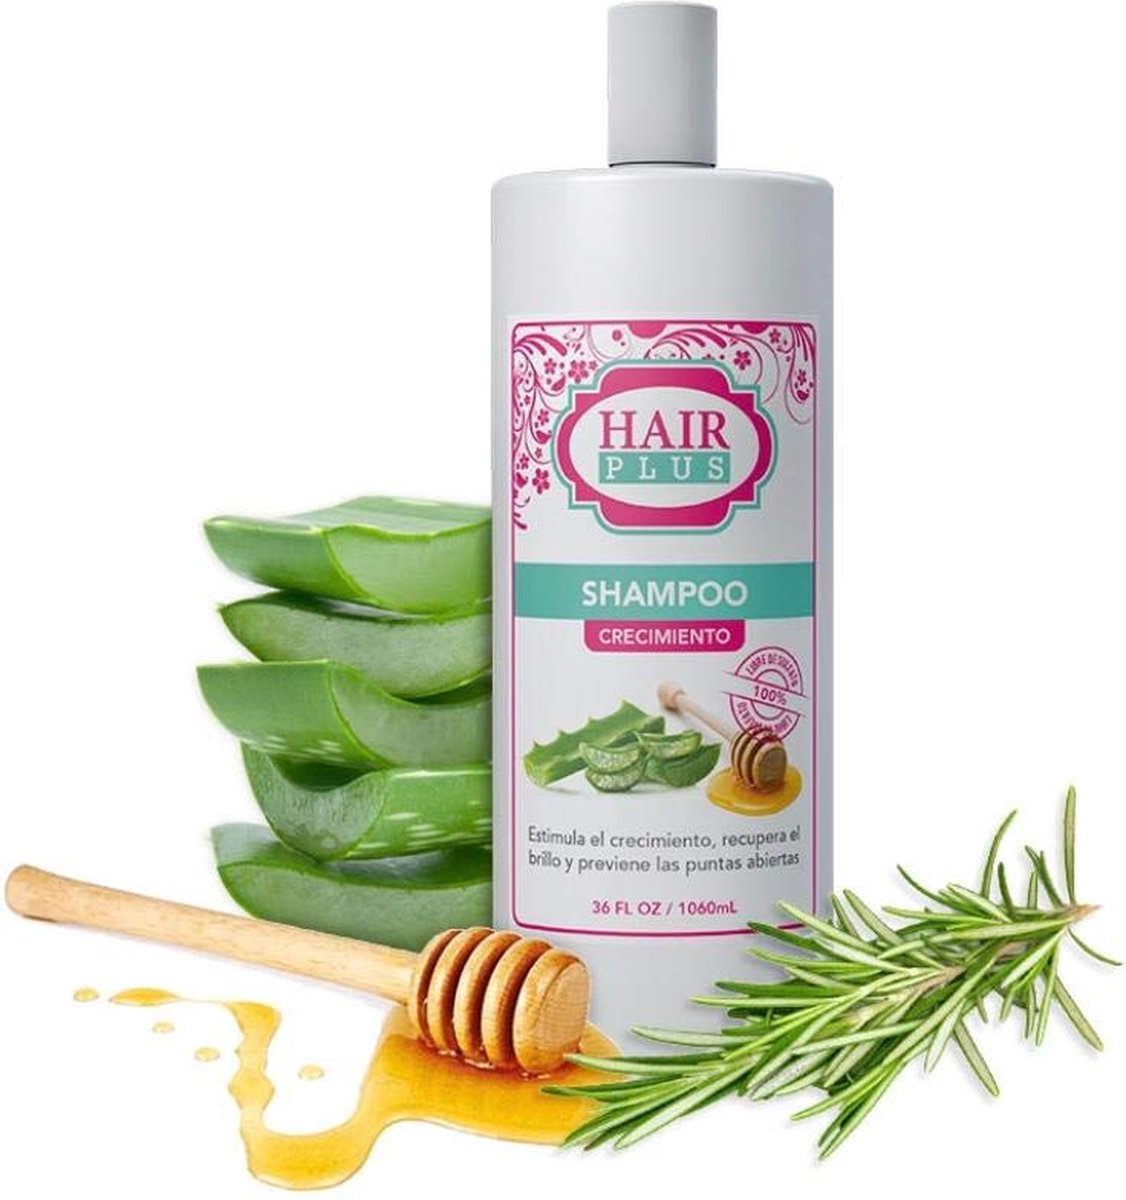 Hairplus Shampoo - 480ml - 16oz